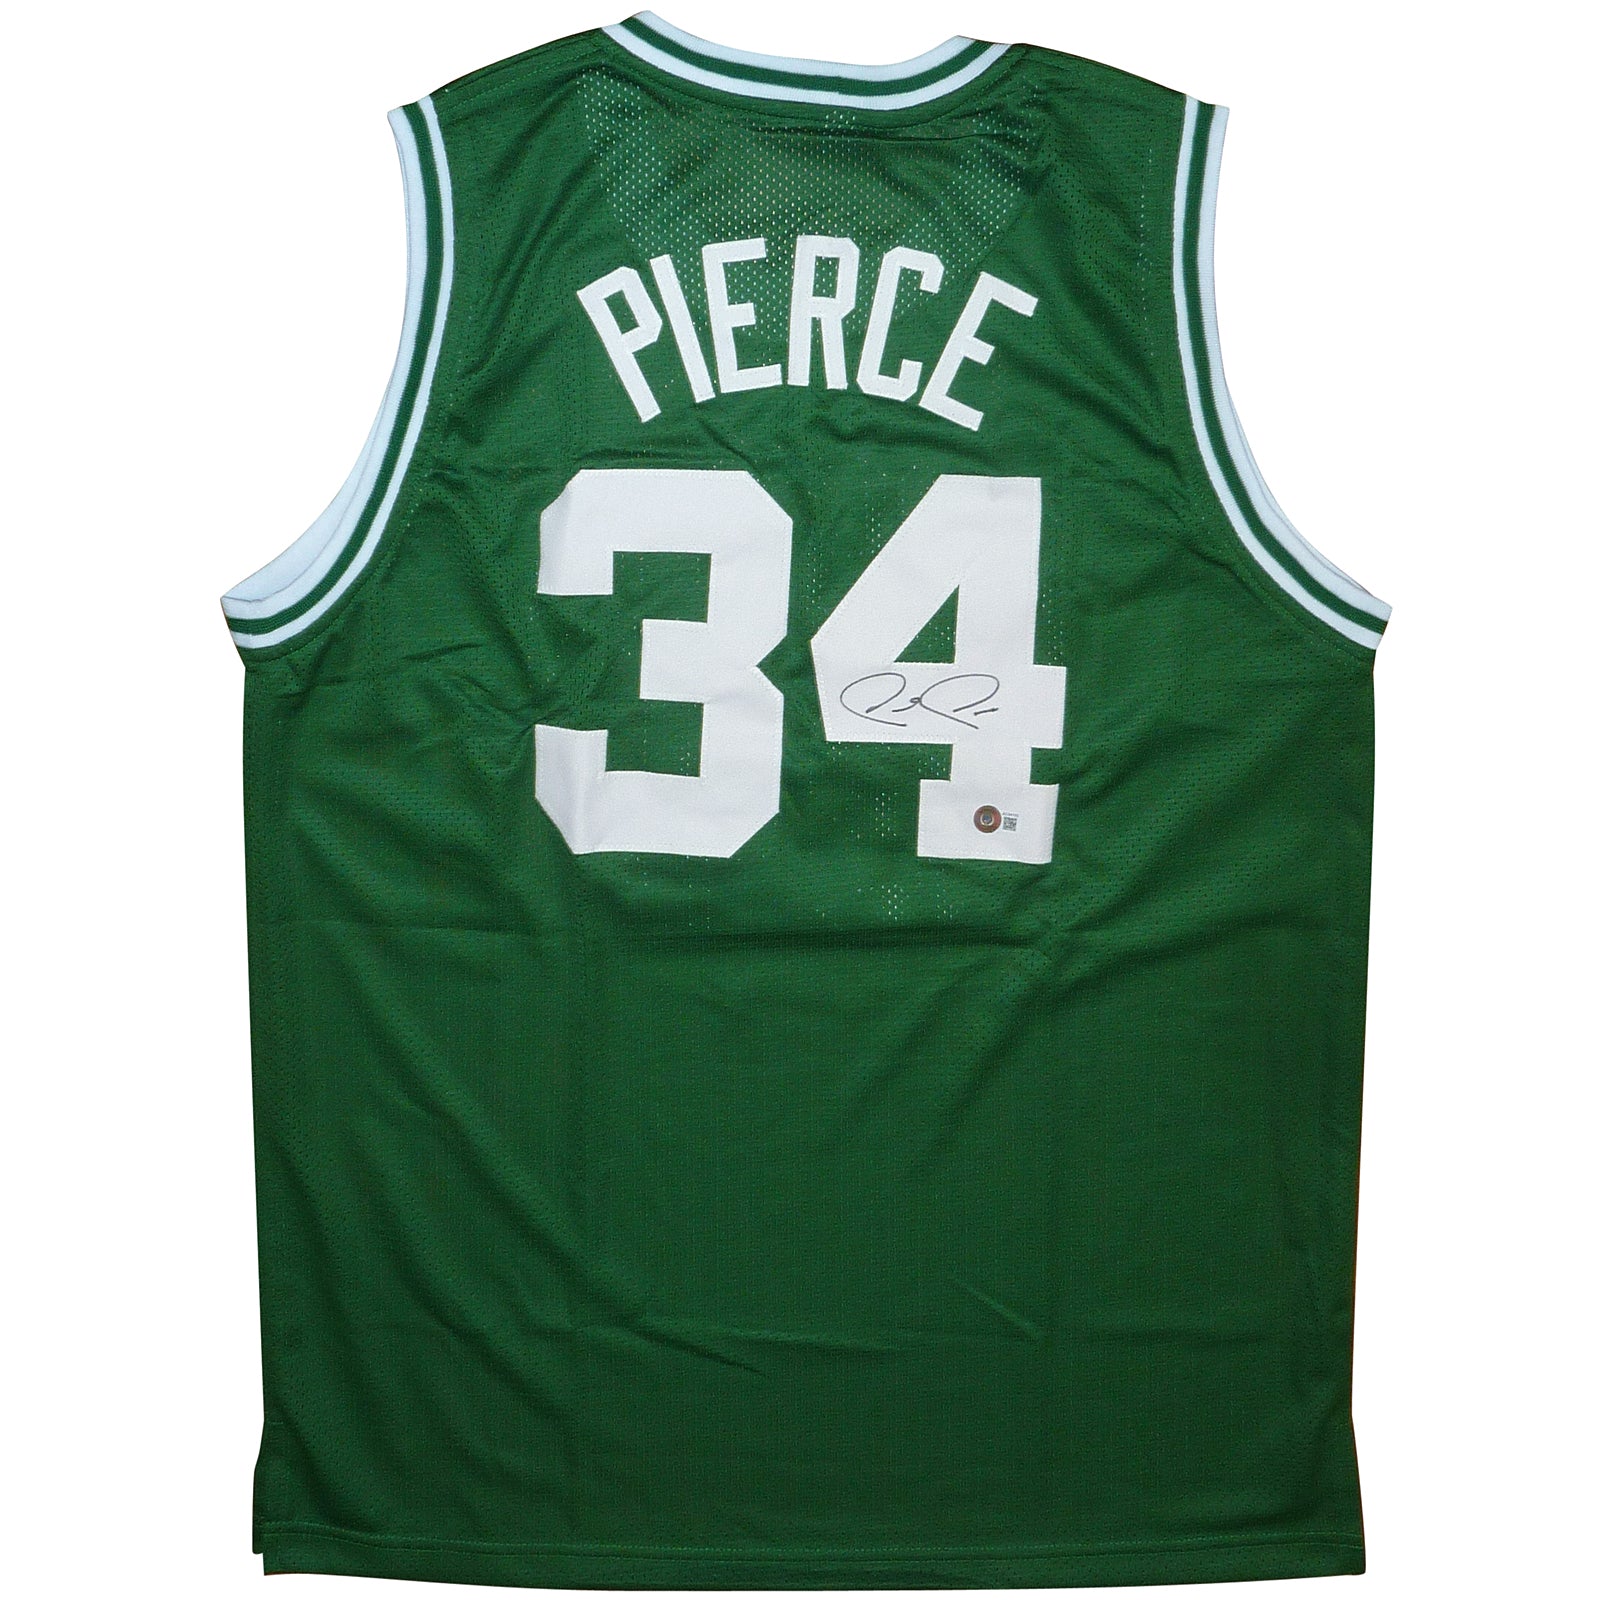 Paul Pierce Autographed Boston (Green #34) Custom Basketball Jersey - Beckett Witness